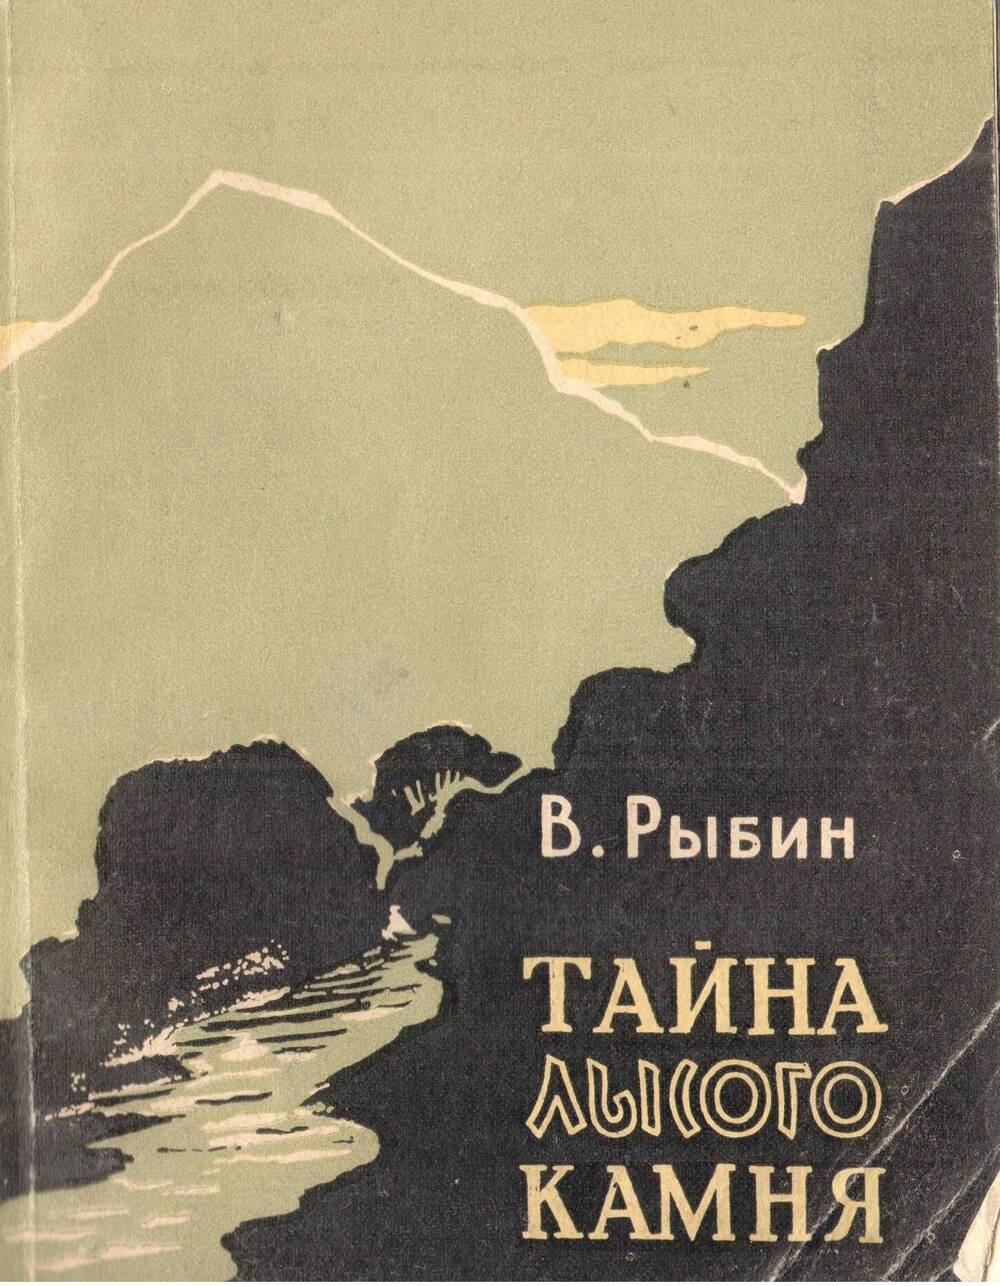 Книга Тайна лысого камня Ашхабат, 1964 г. В.Рыбин.